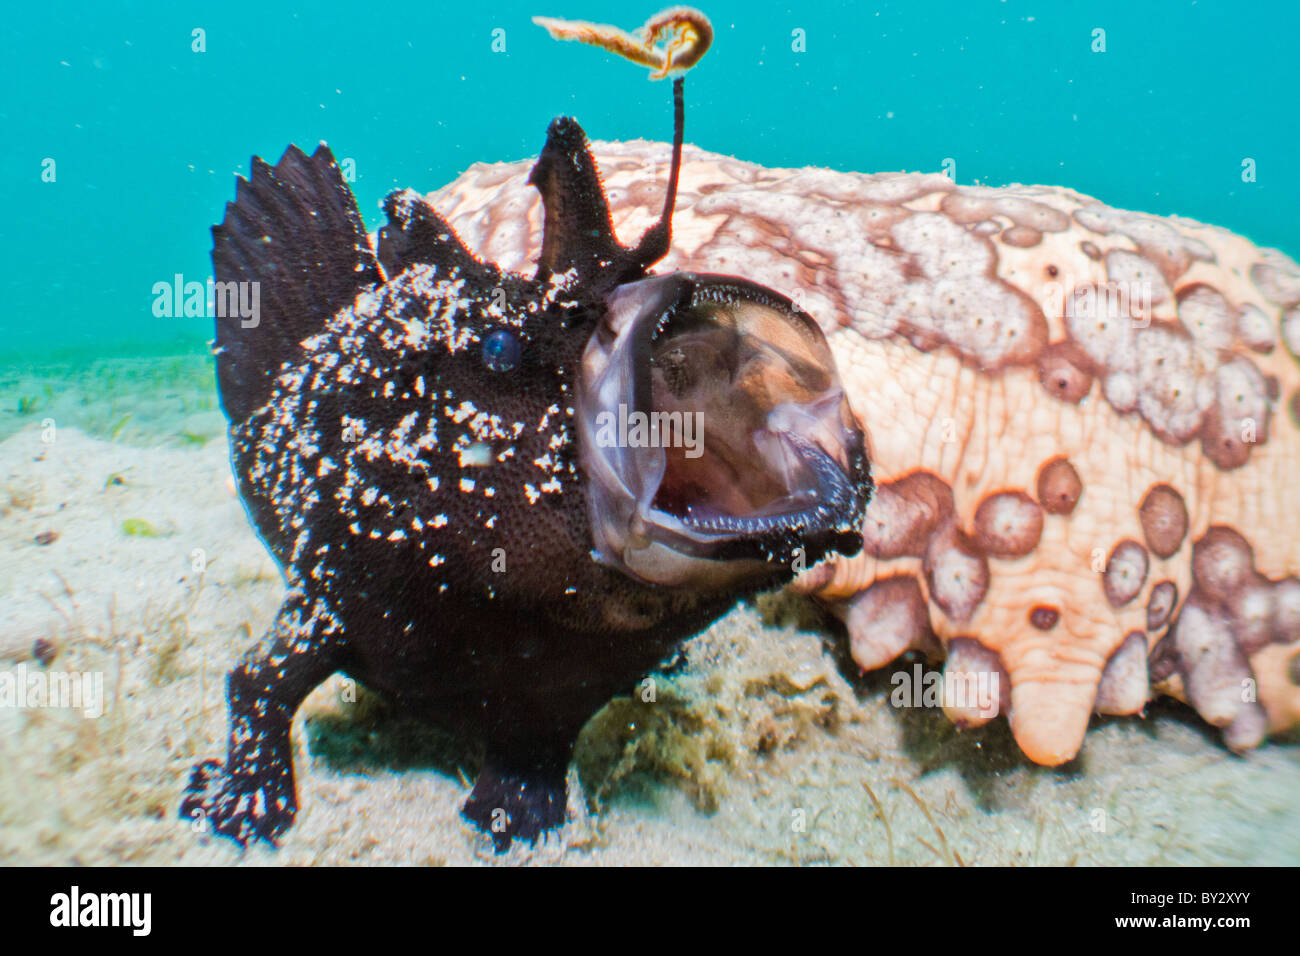 Black Frogfish Yawning with Sea Cucumber Stock Photo